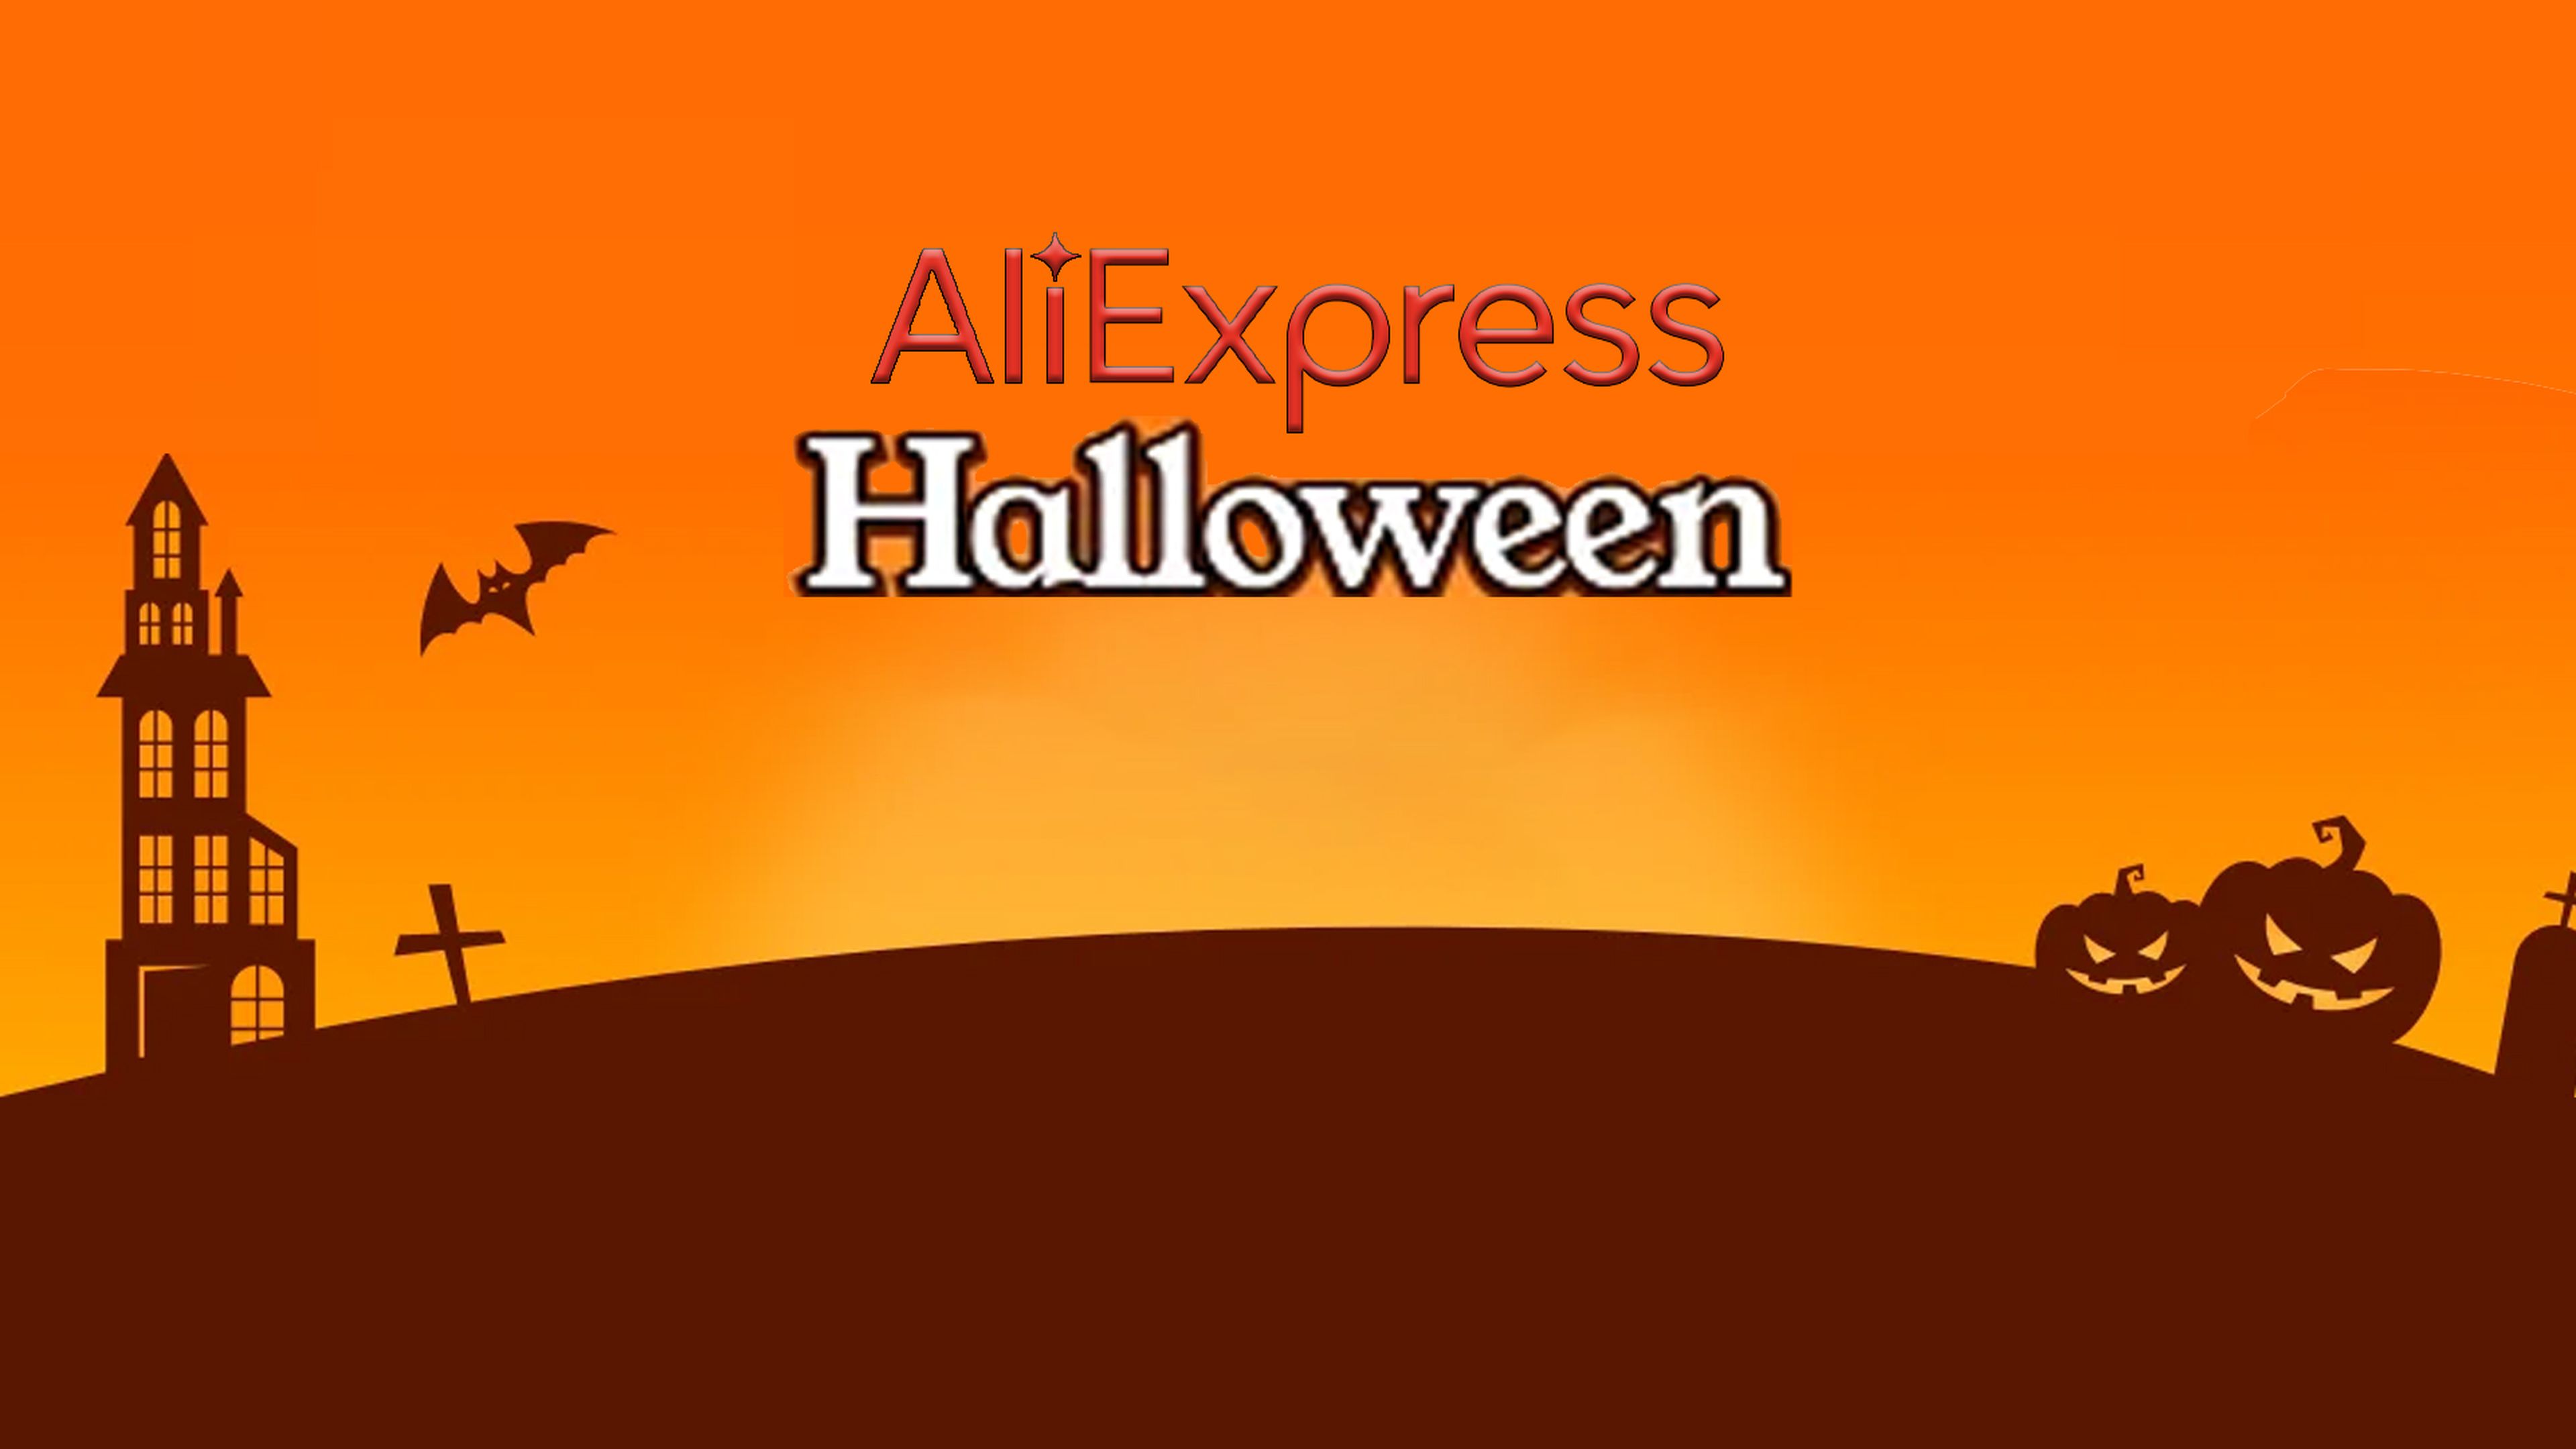 Halloween Party Aliexpress